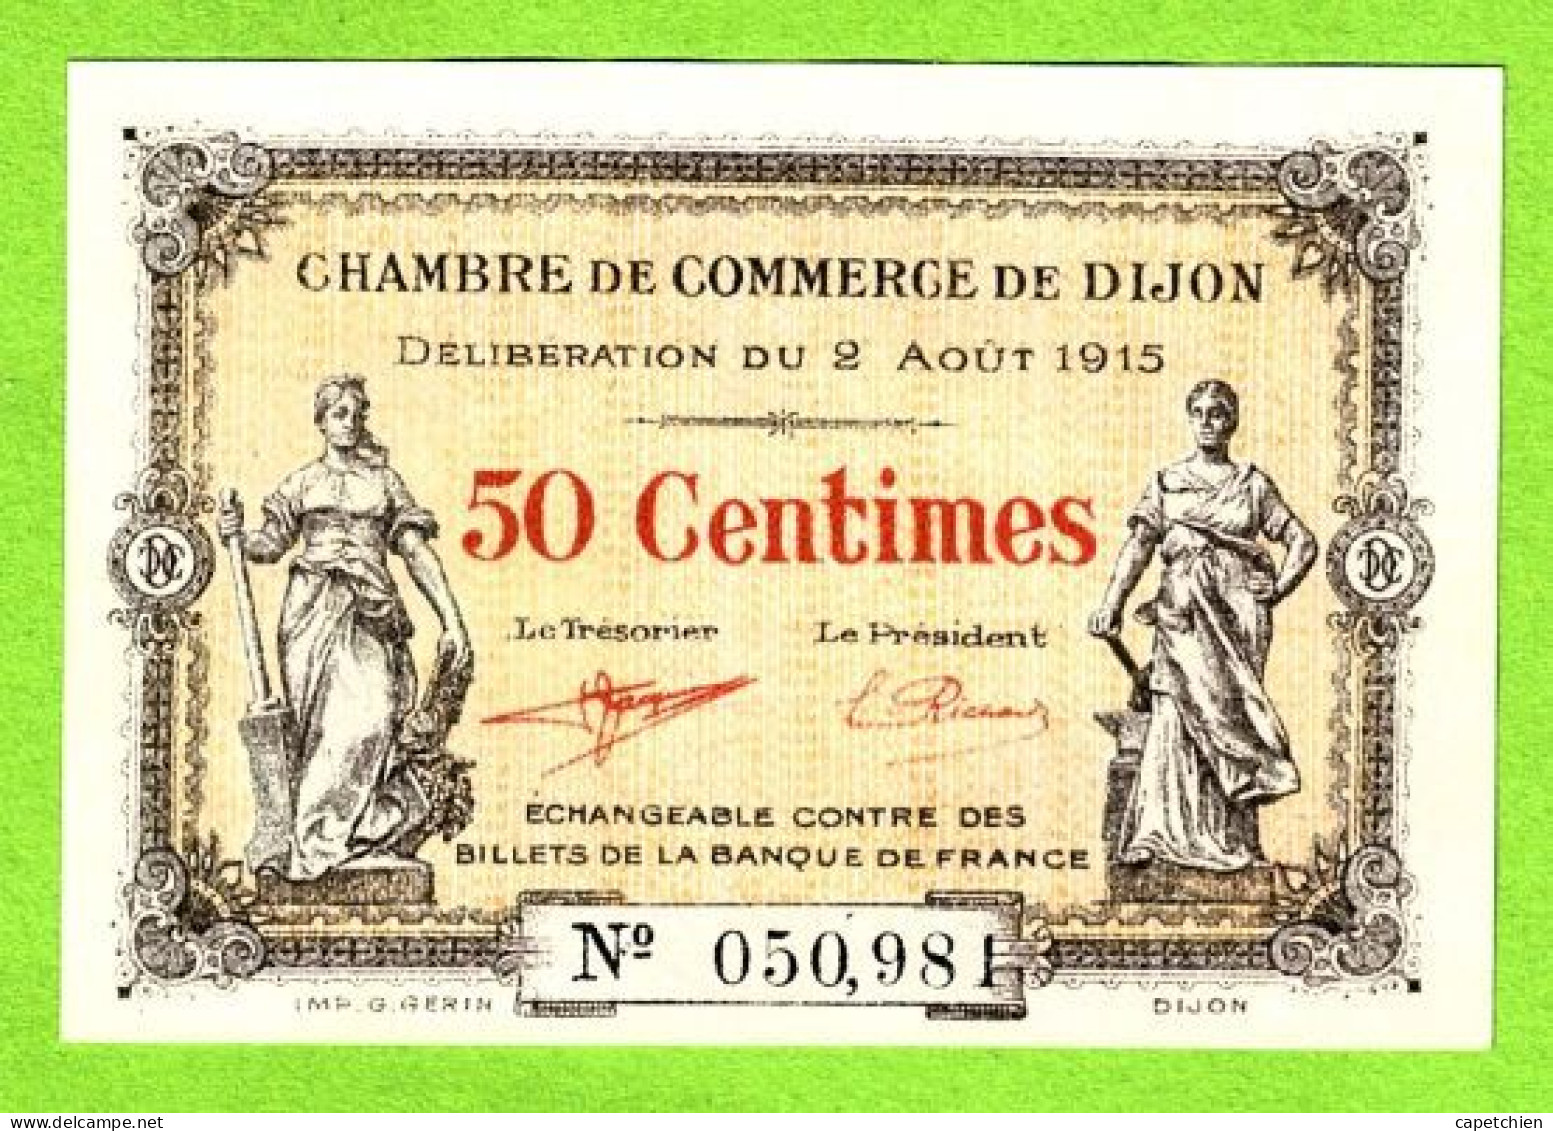 FRANCE / CHAMBRE De COMMERCE De DIJON/ 50 CENT. / 2 AOUT 1915 / N° 050,98 / SERIE - Camera Di Commercio